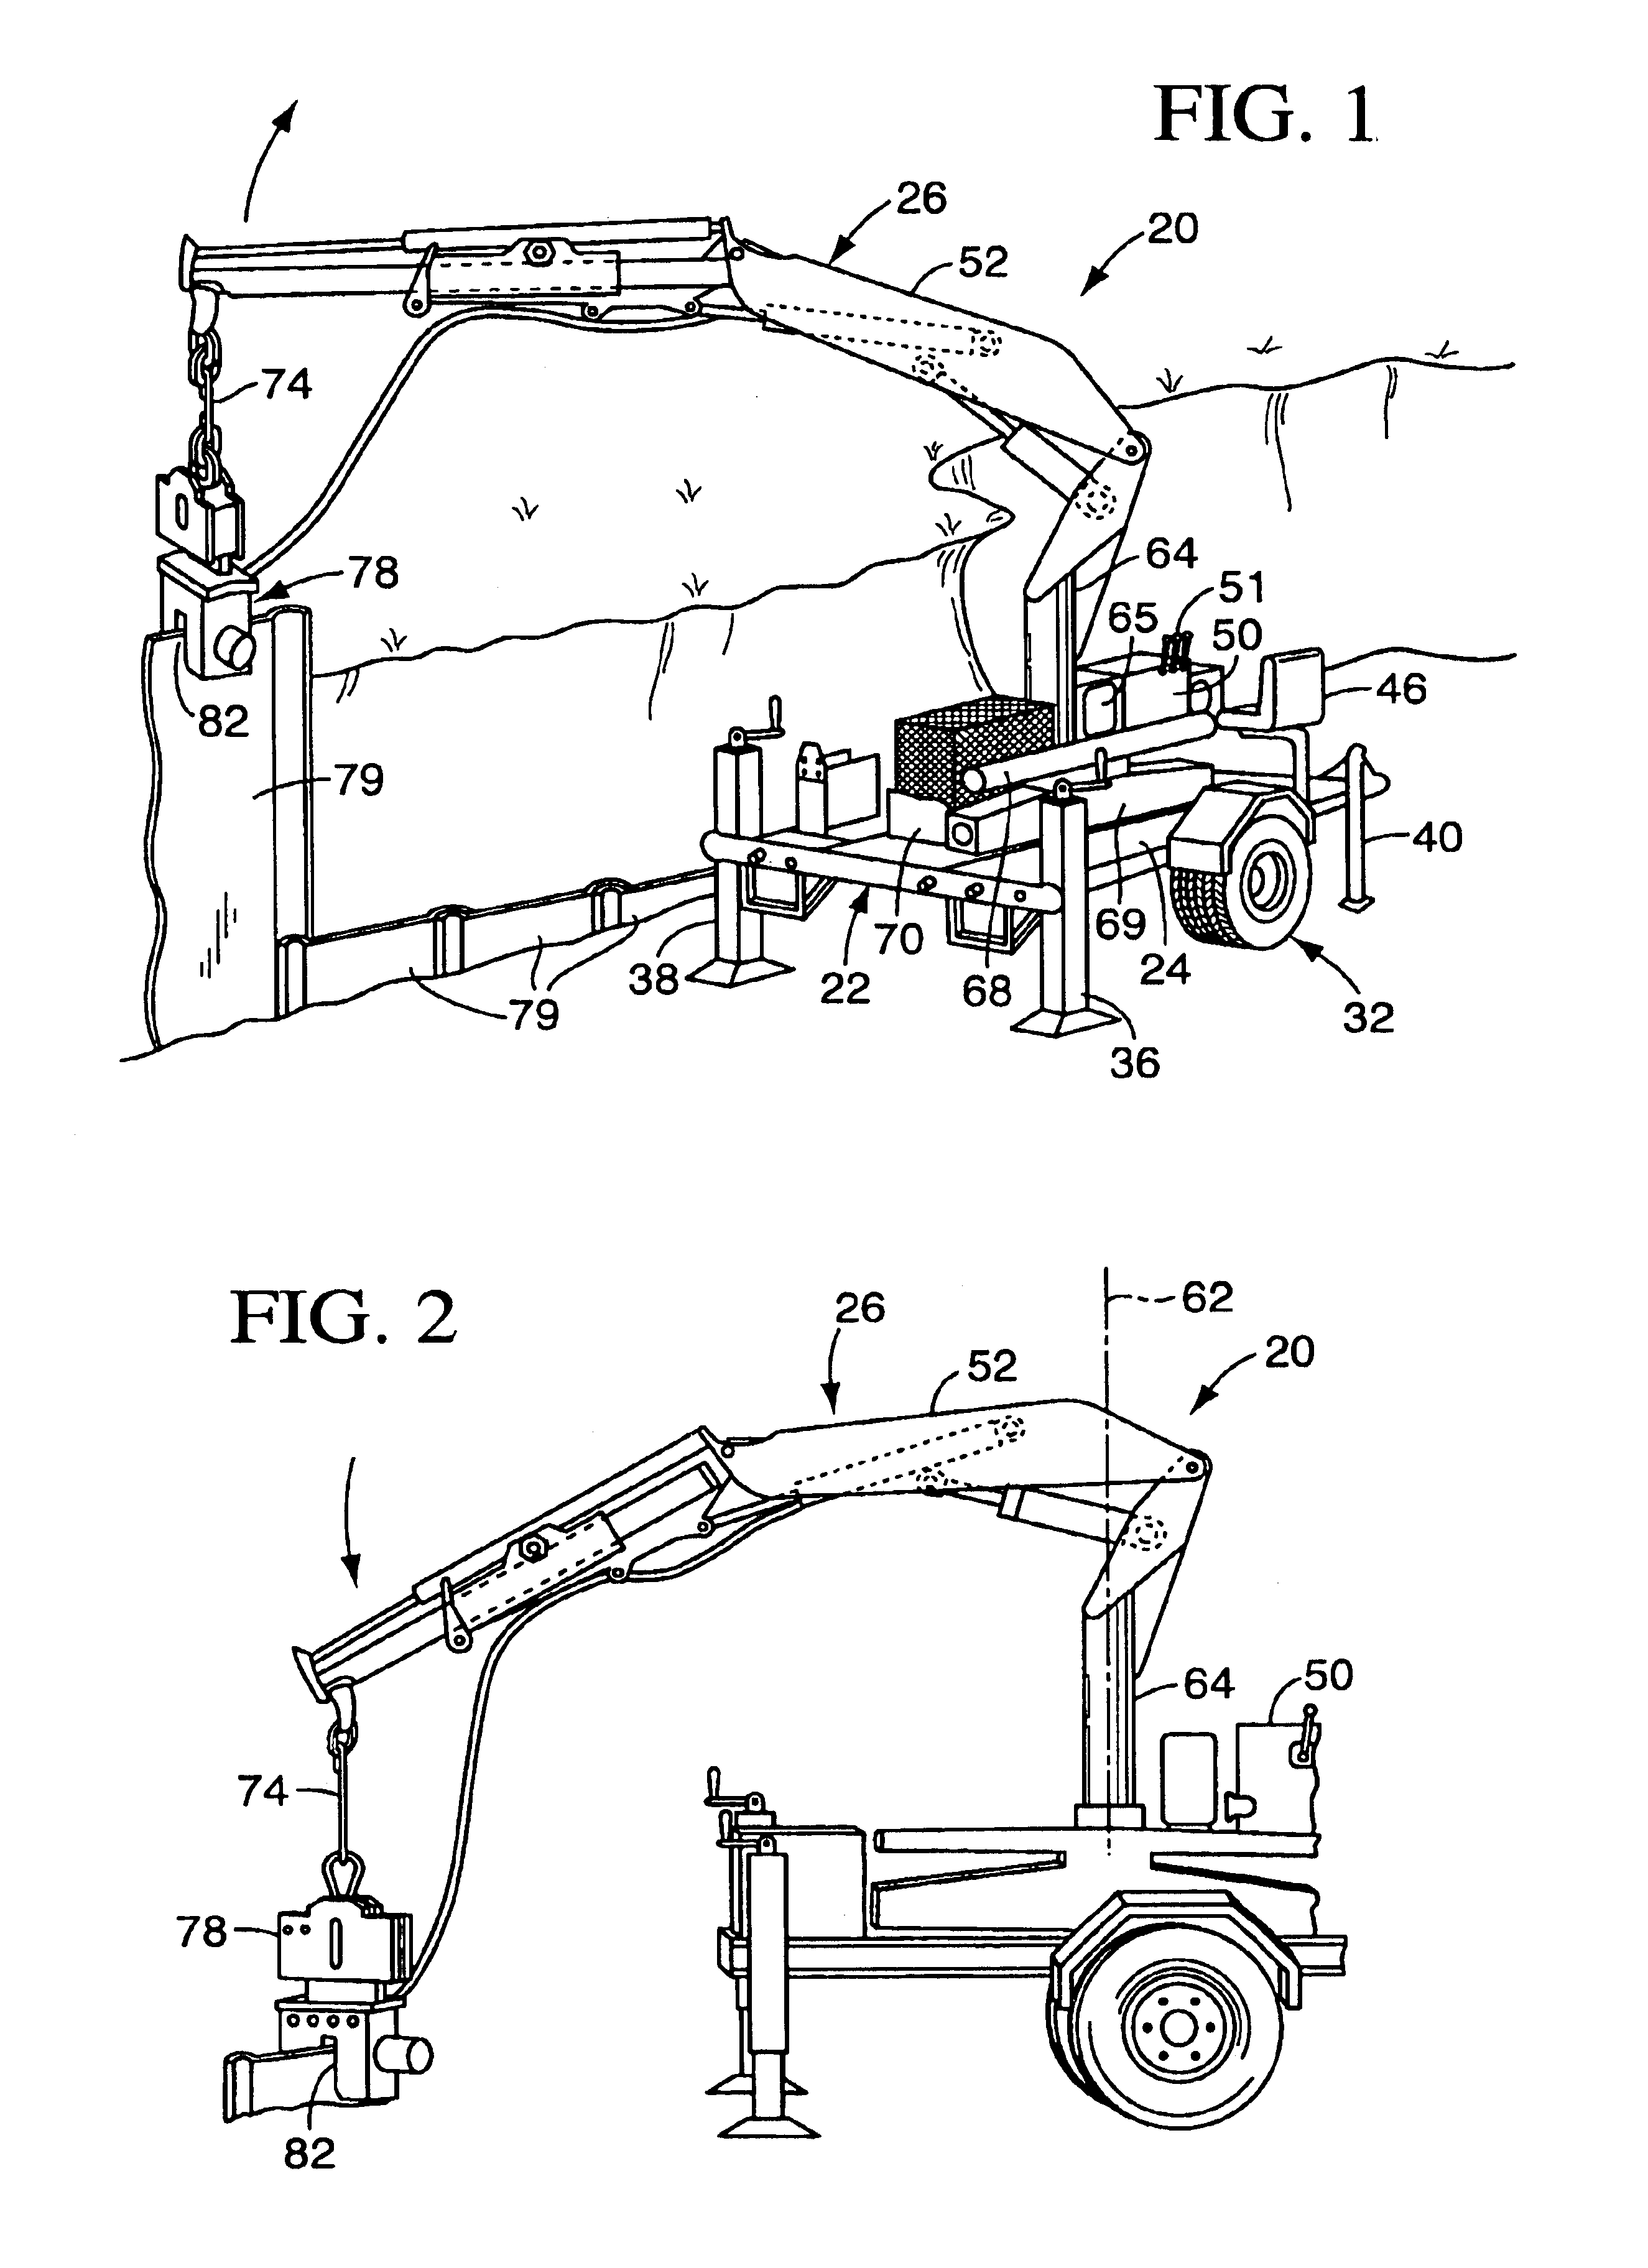 Trailer-mounted crane apparatus